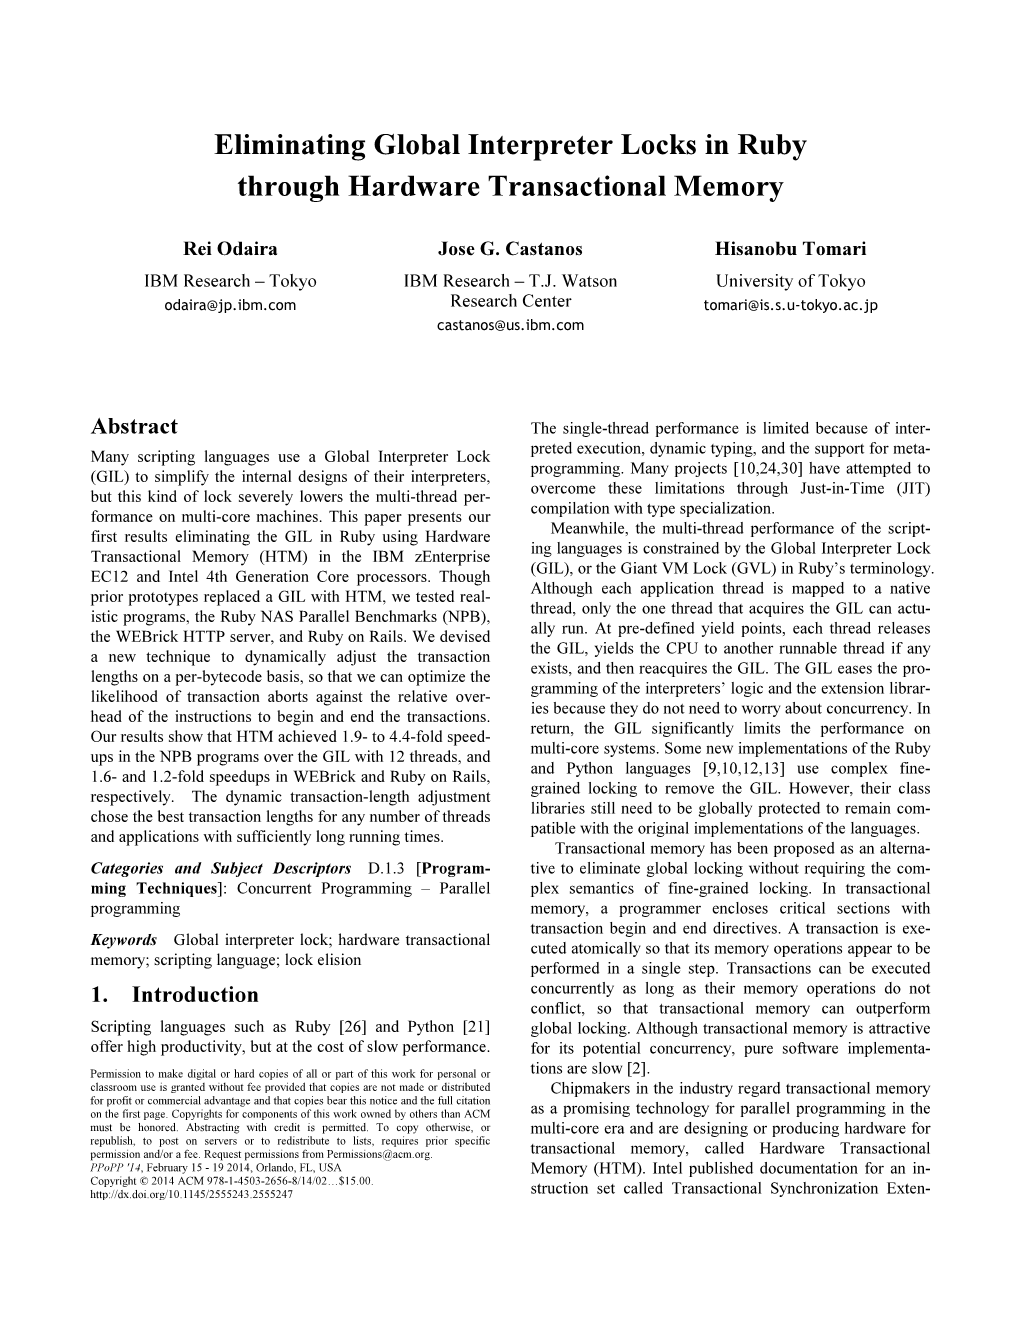 Eliminating Global Interpreter Locks in Ruby Through Hardware Transactional Memory